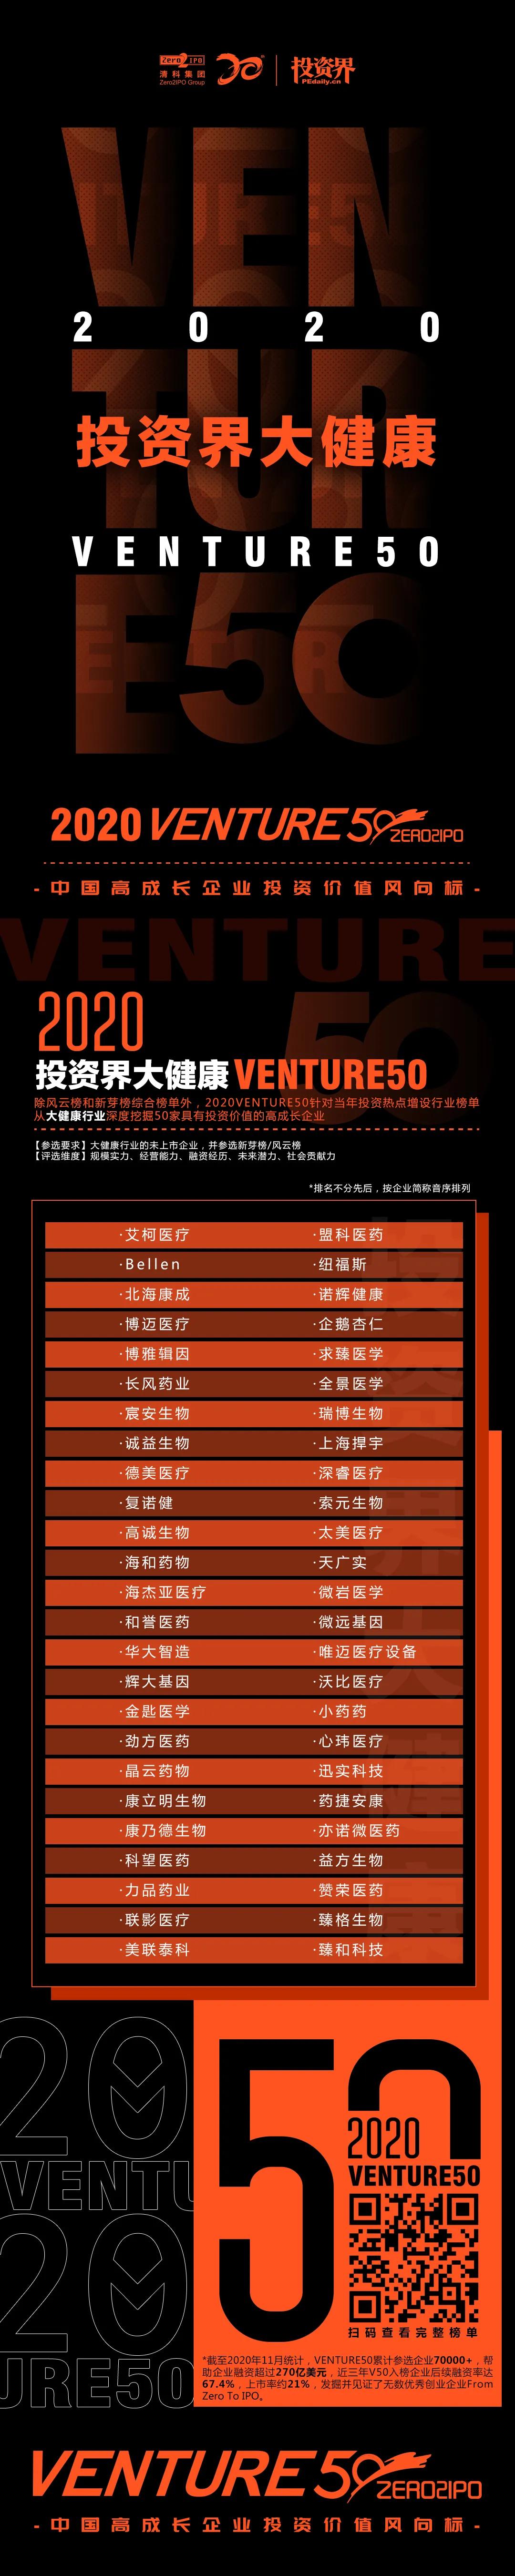 2020Venture50榜单揭晓，绍兴企业迅实荣登两大榜单_551300625.jpeg